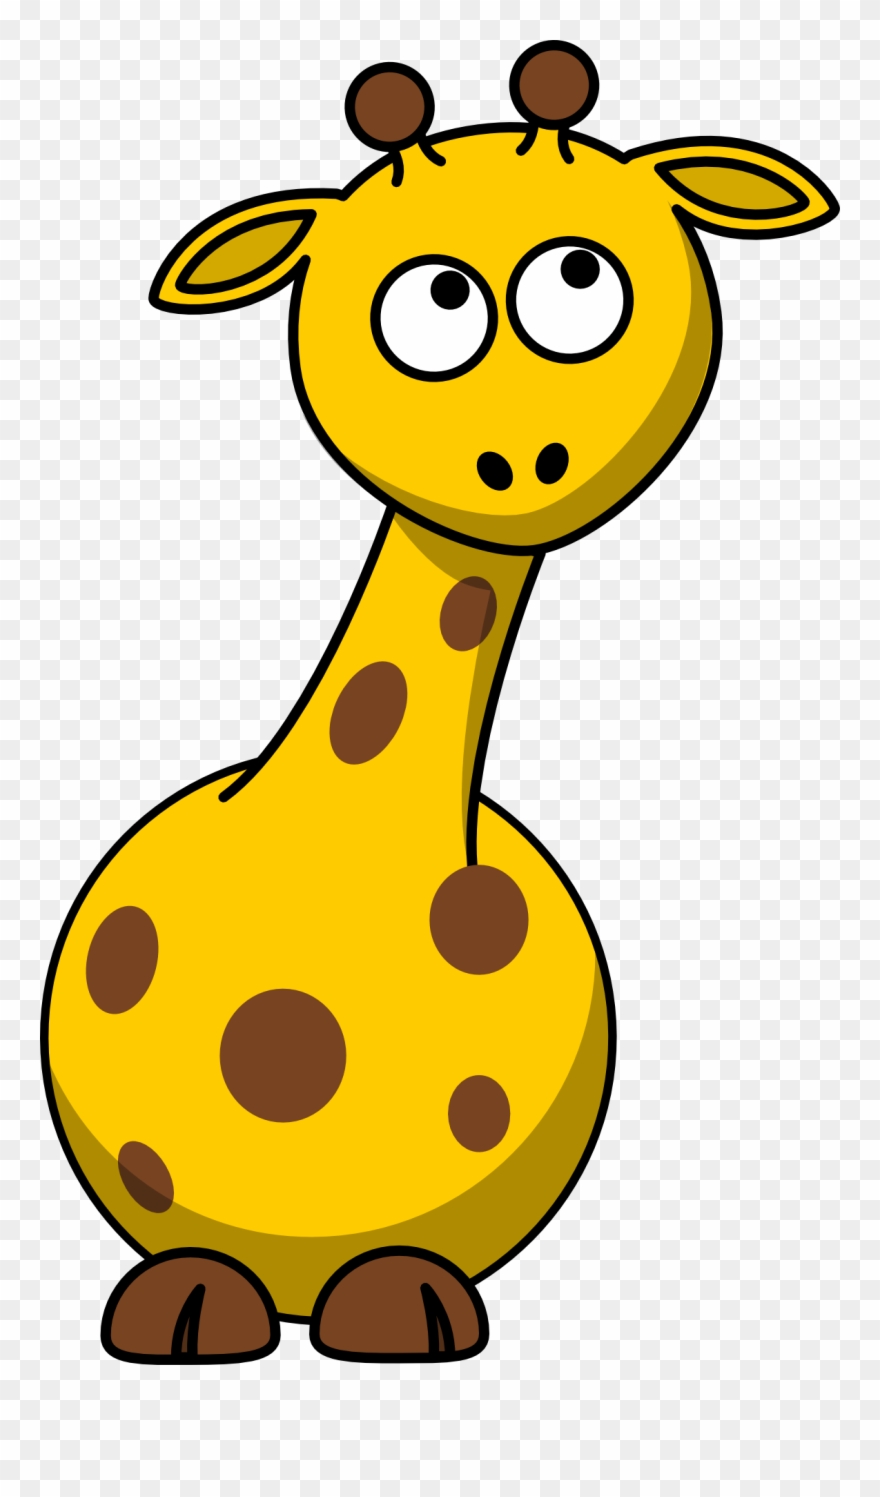 Download 3,561 Baby giraffe vector images at Vectorified.com